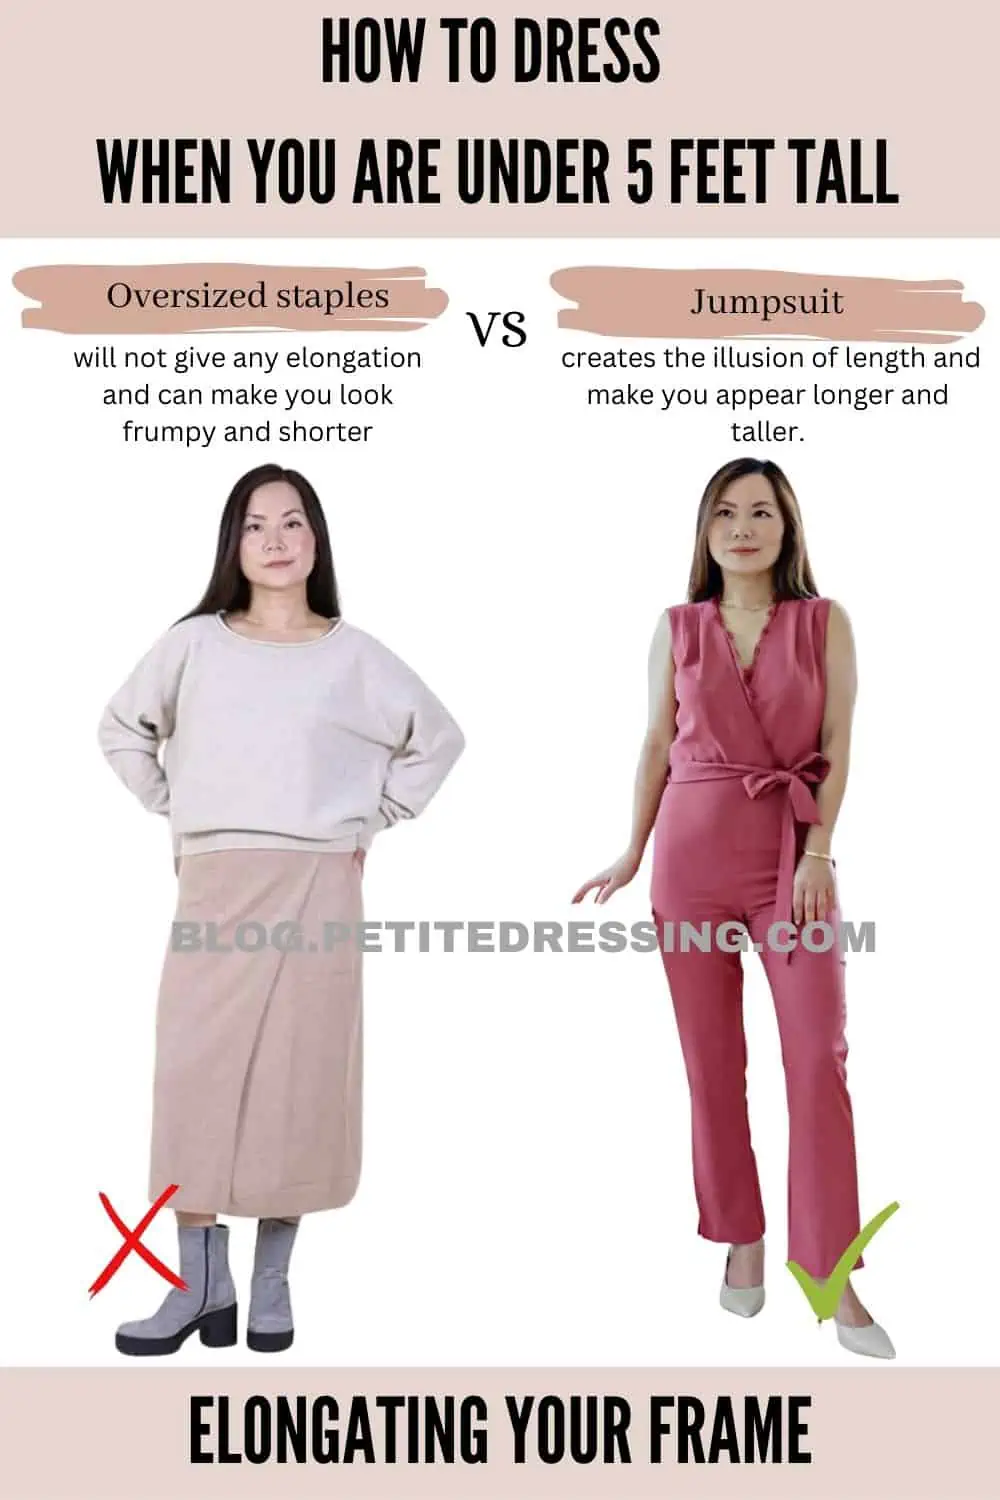 What Length Dress Should A 5 Foot Woman Wear?